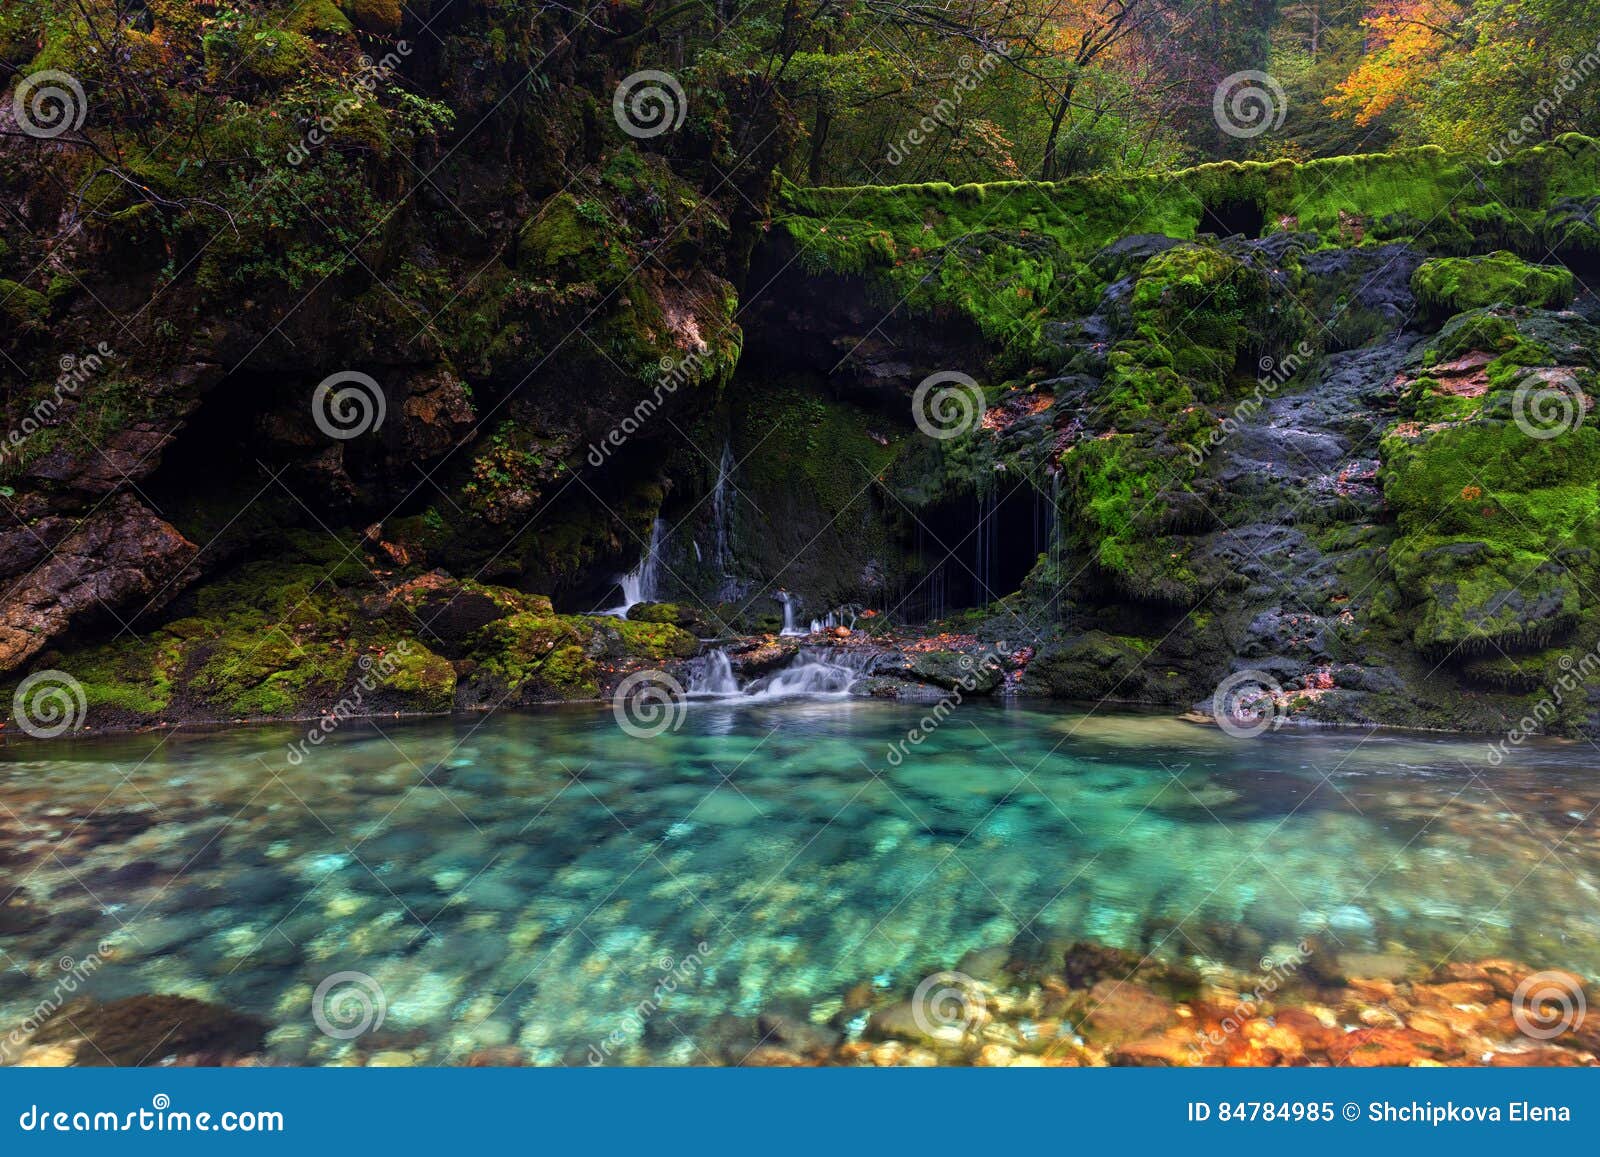 Waterfall Among Rocks Stock Image Image Of Glare Moss 84784985